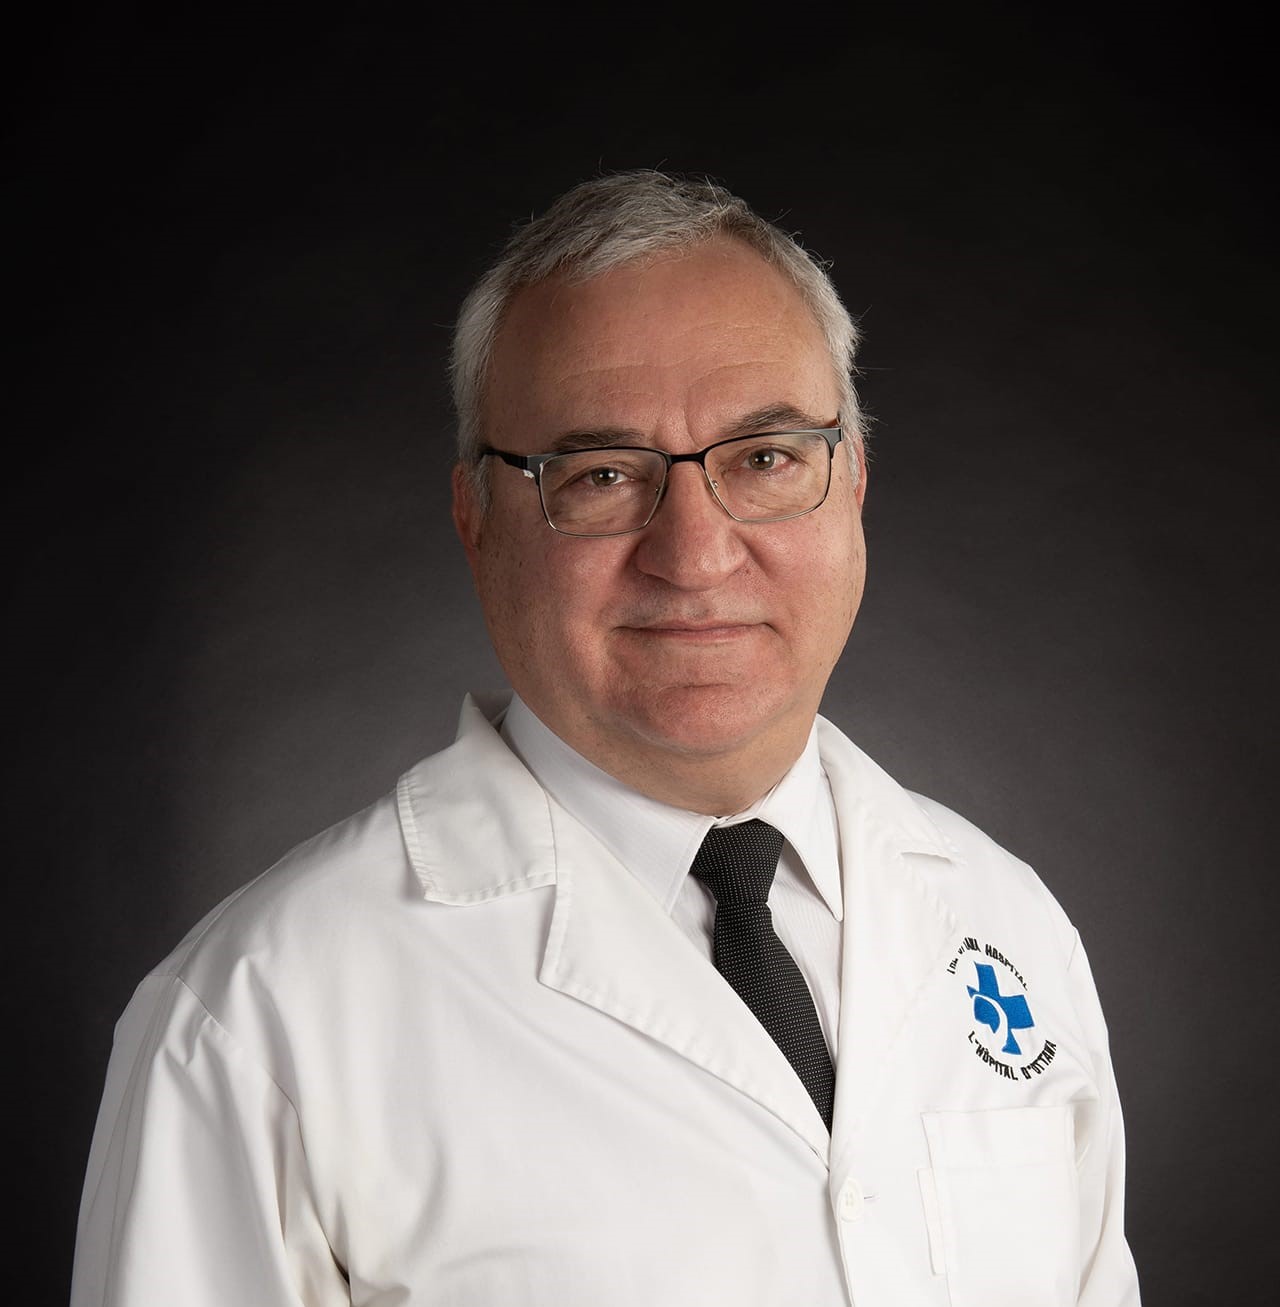 Dr. Robert Feibel